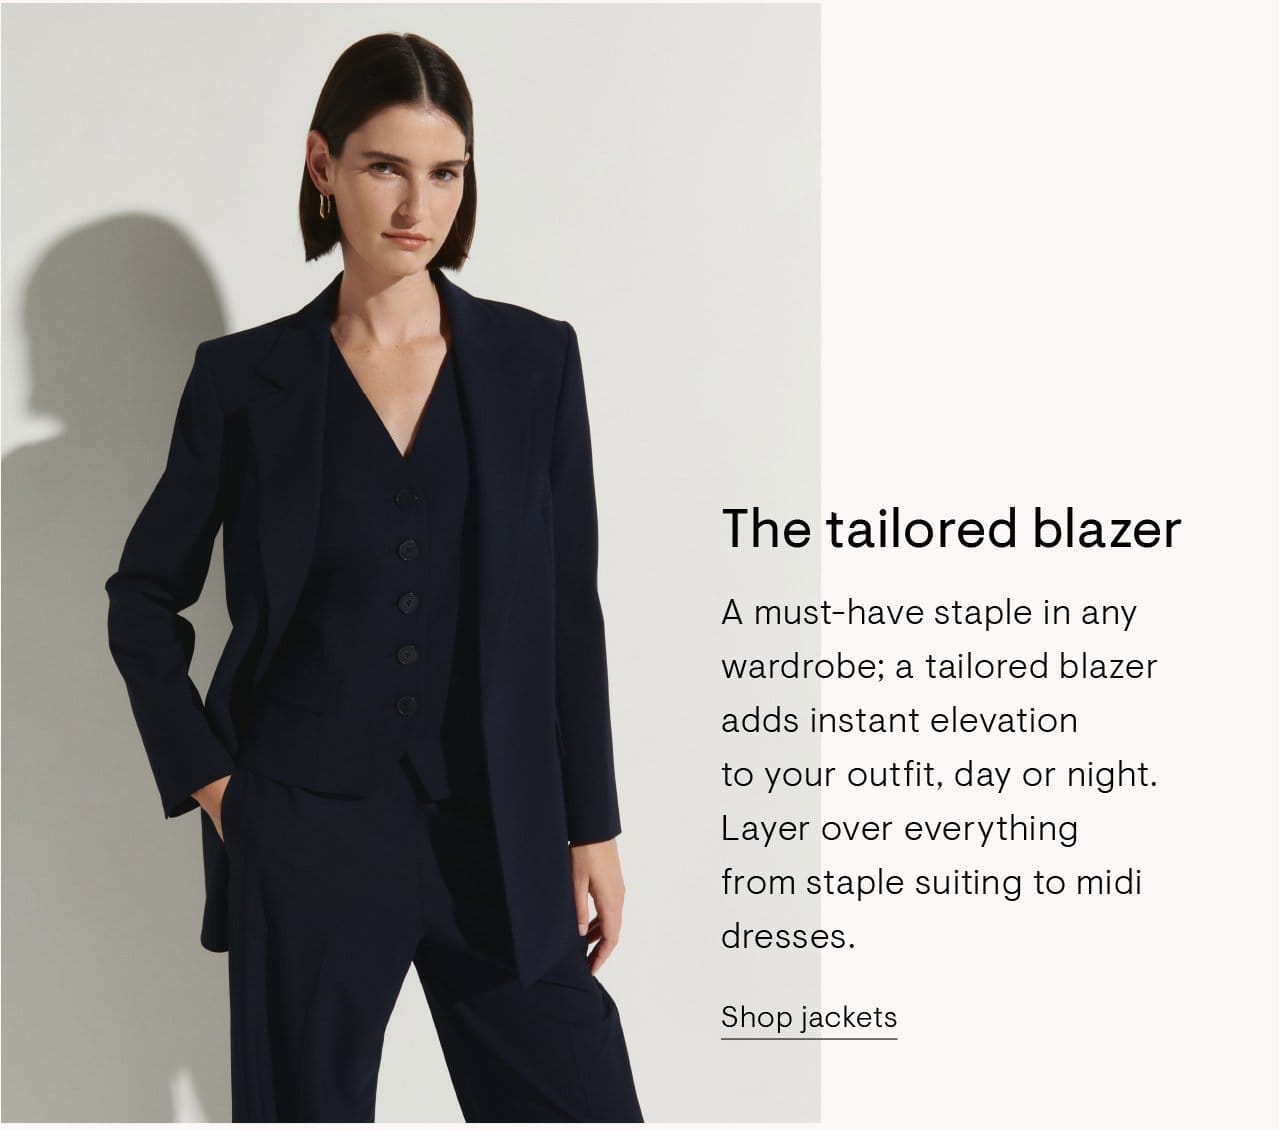 The tailored blazer